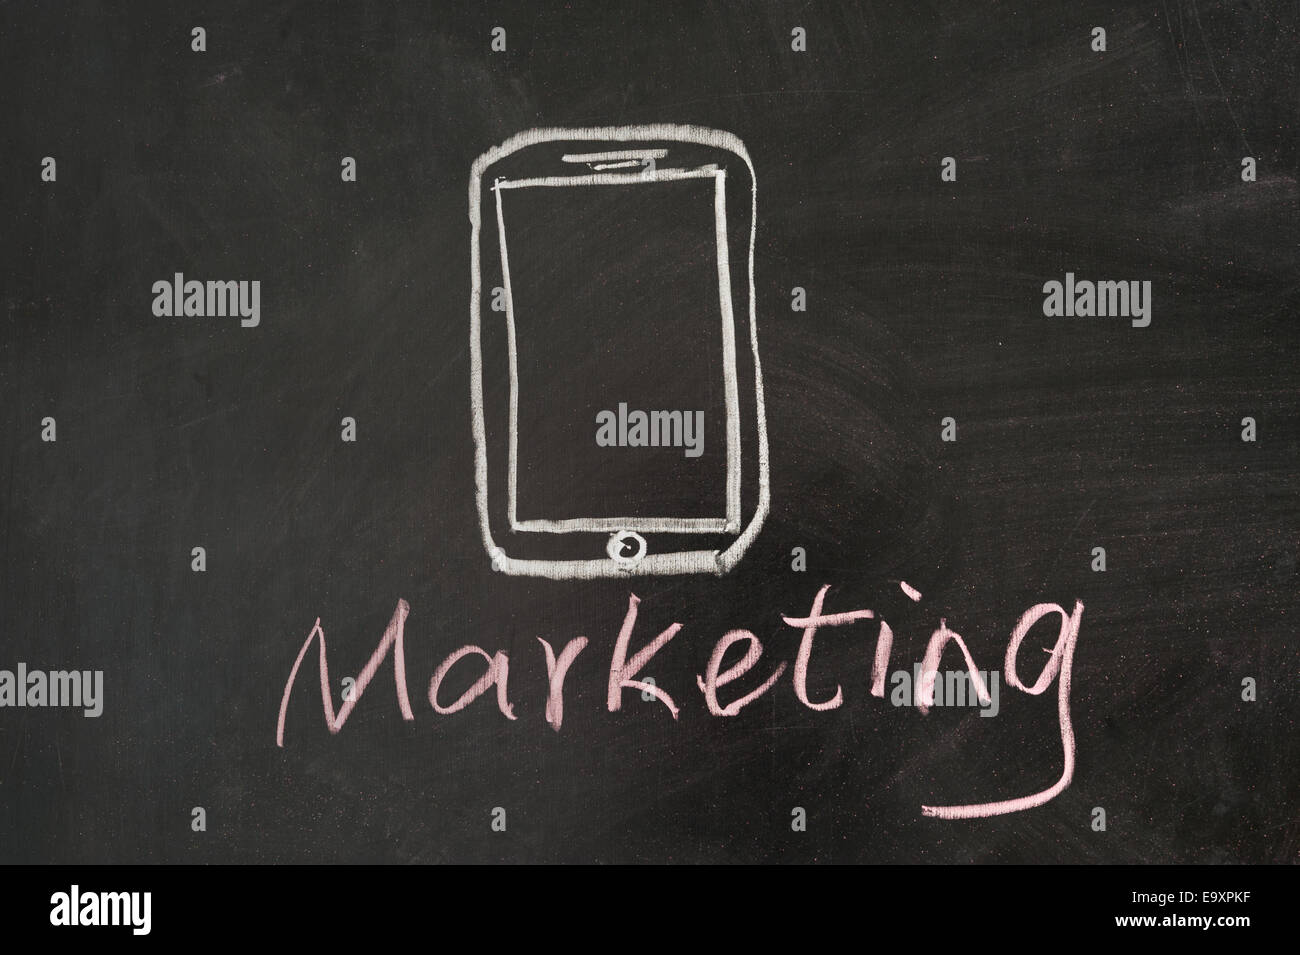 Mobile marketing concept drawn on blackboard Stock Photo